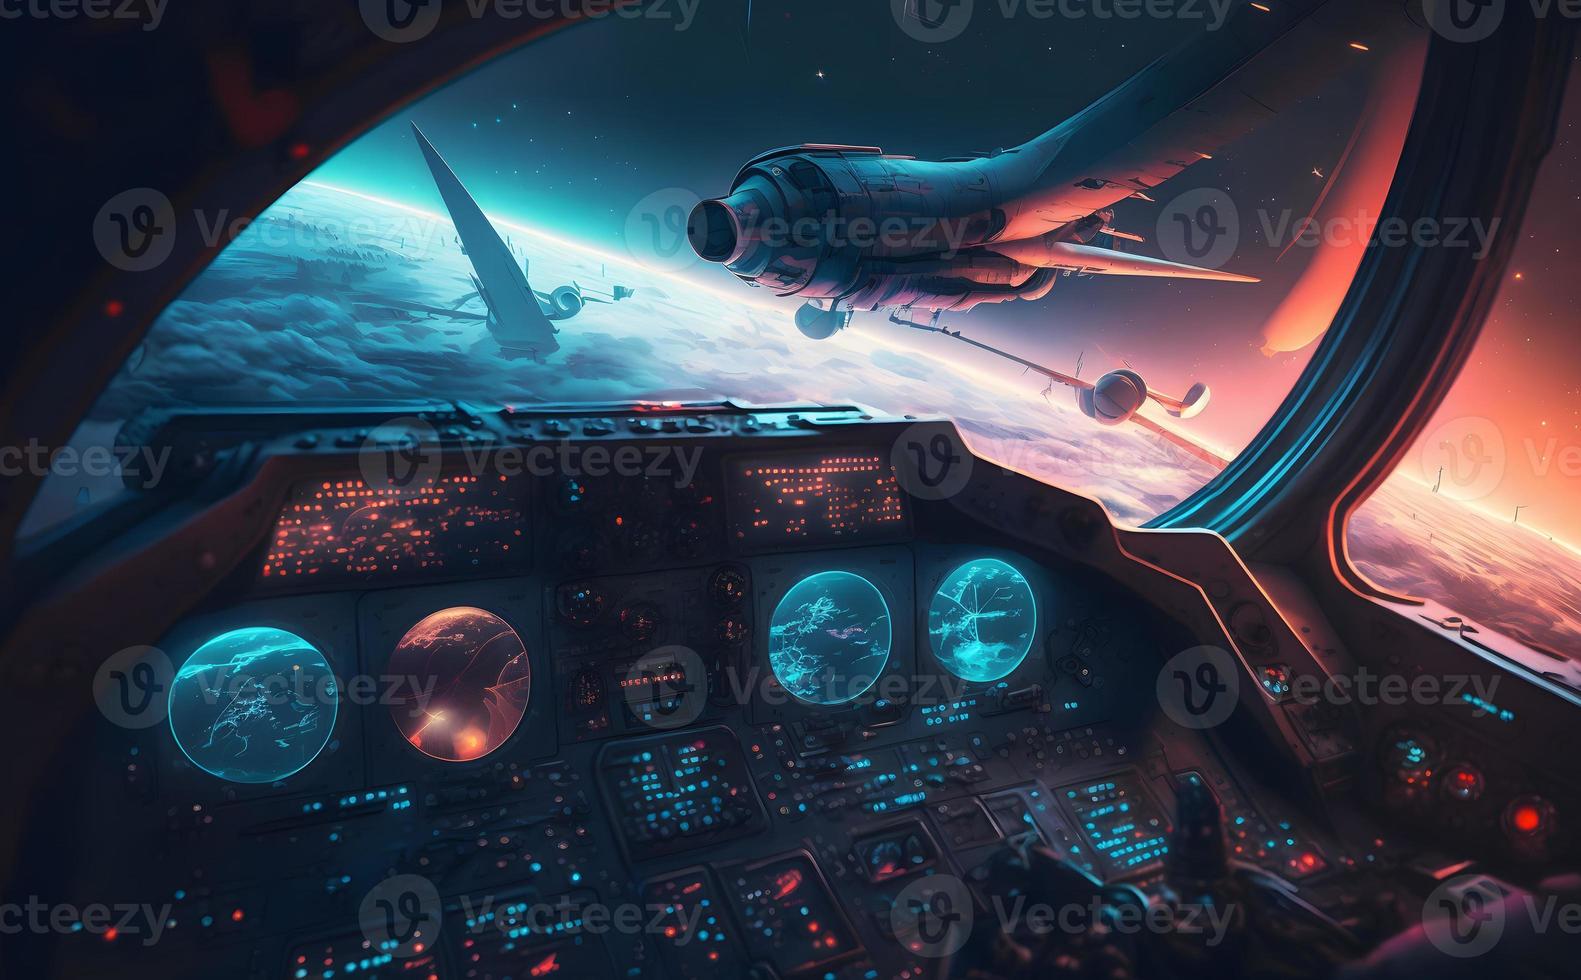 Airplane cockpit view during intergalaxy journey flight or spaceship battle. Neural network generated art photo